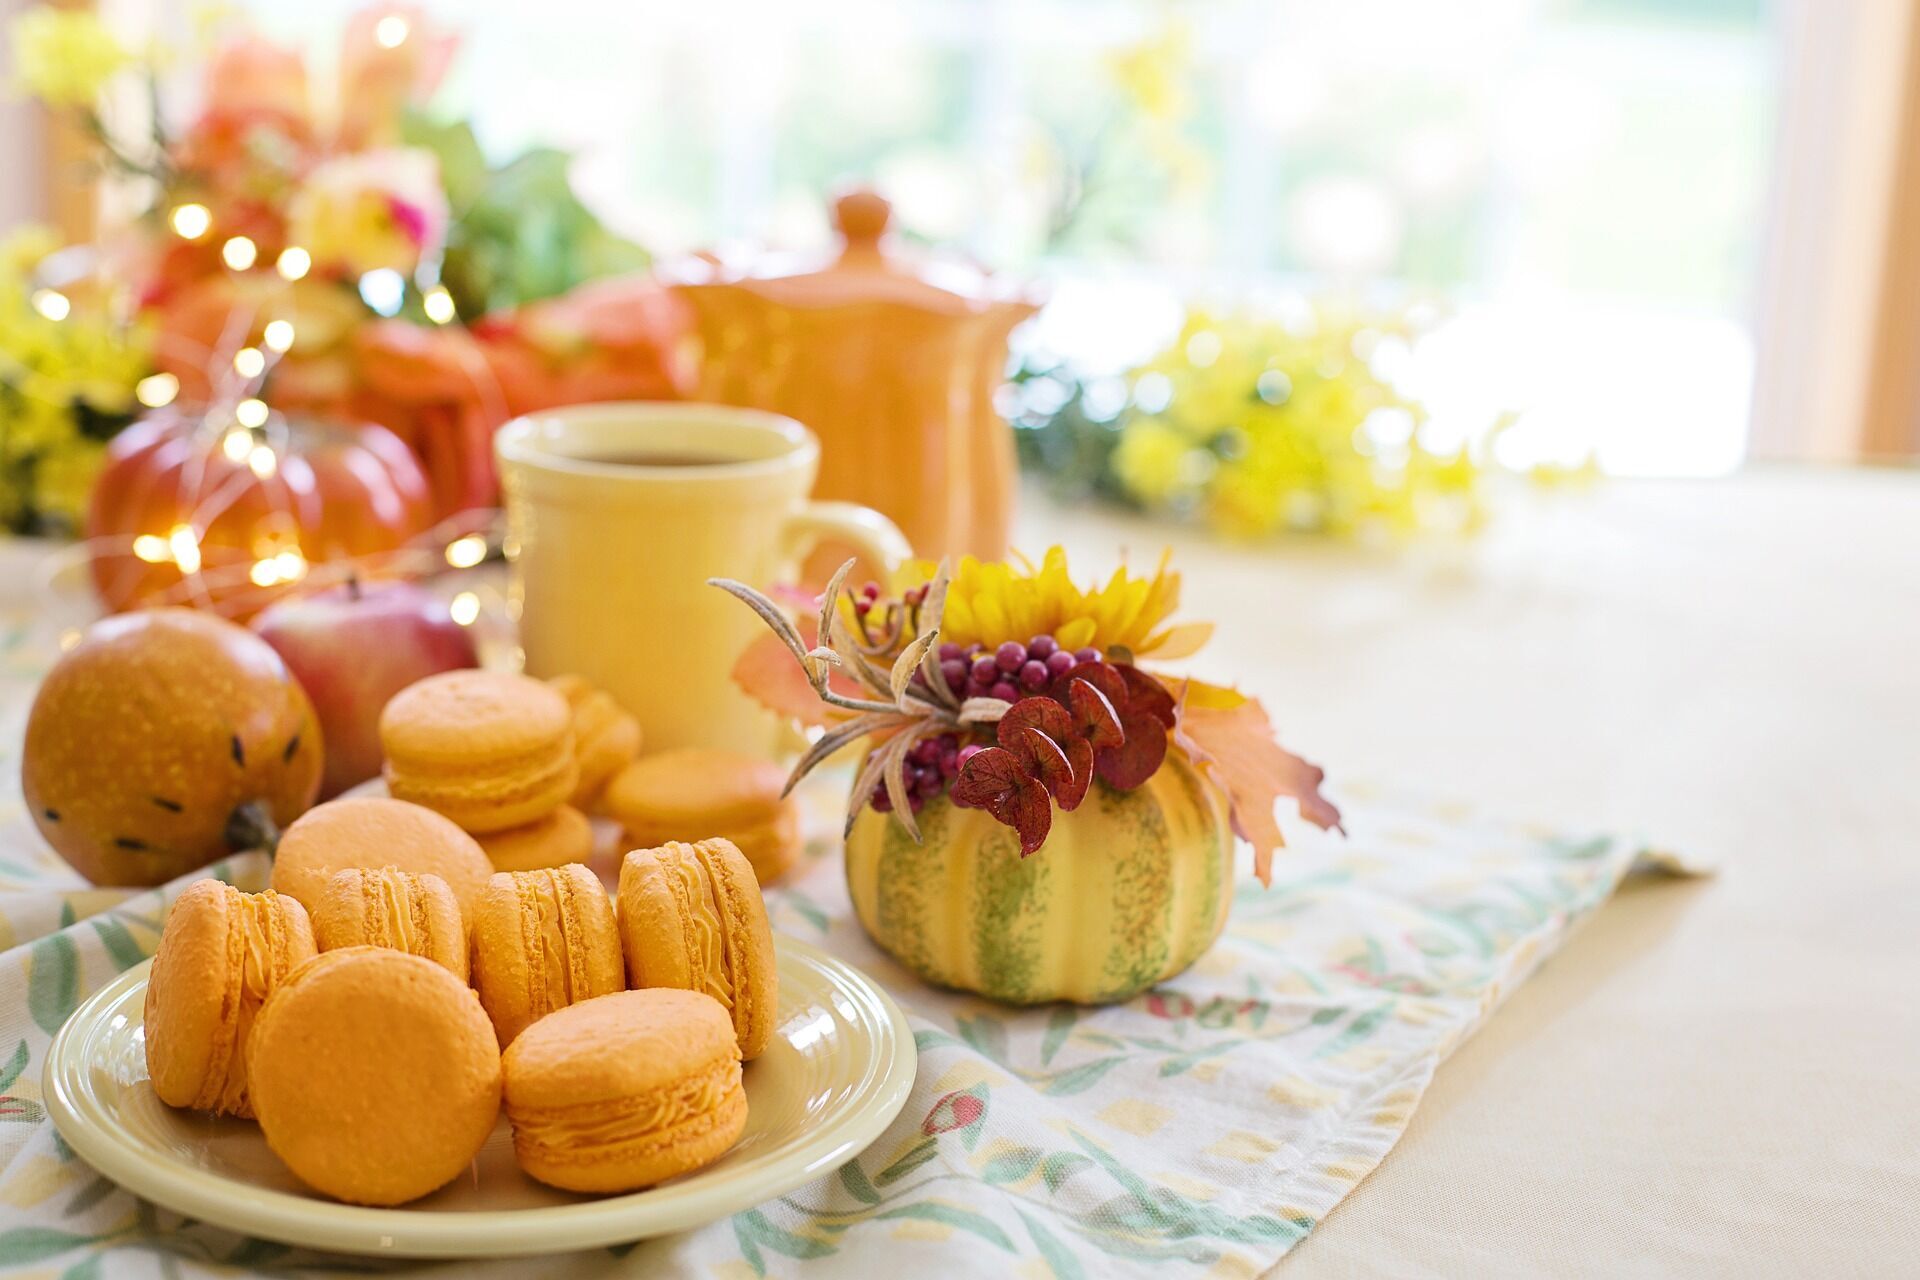 Macaron is a popular French dessert